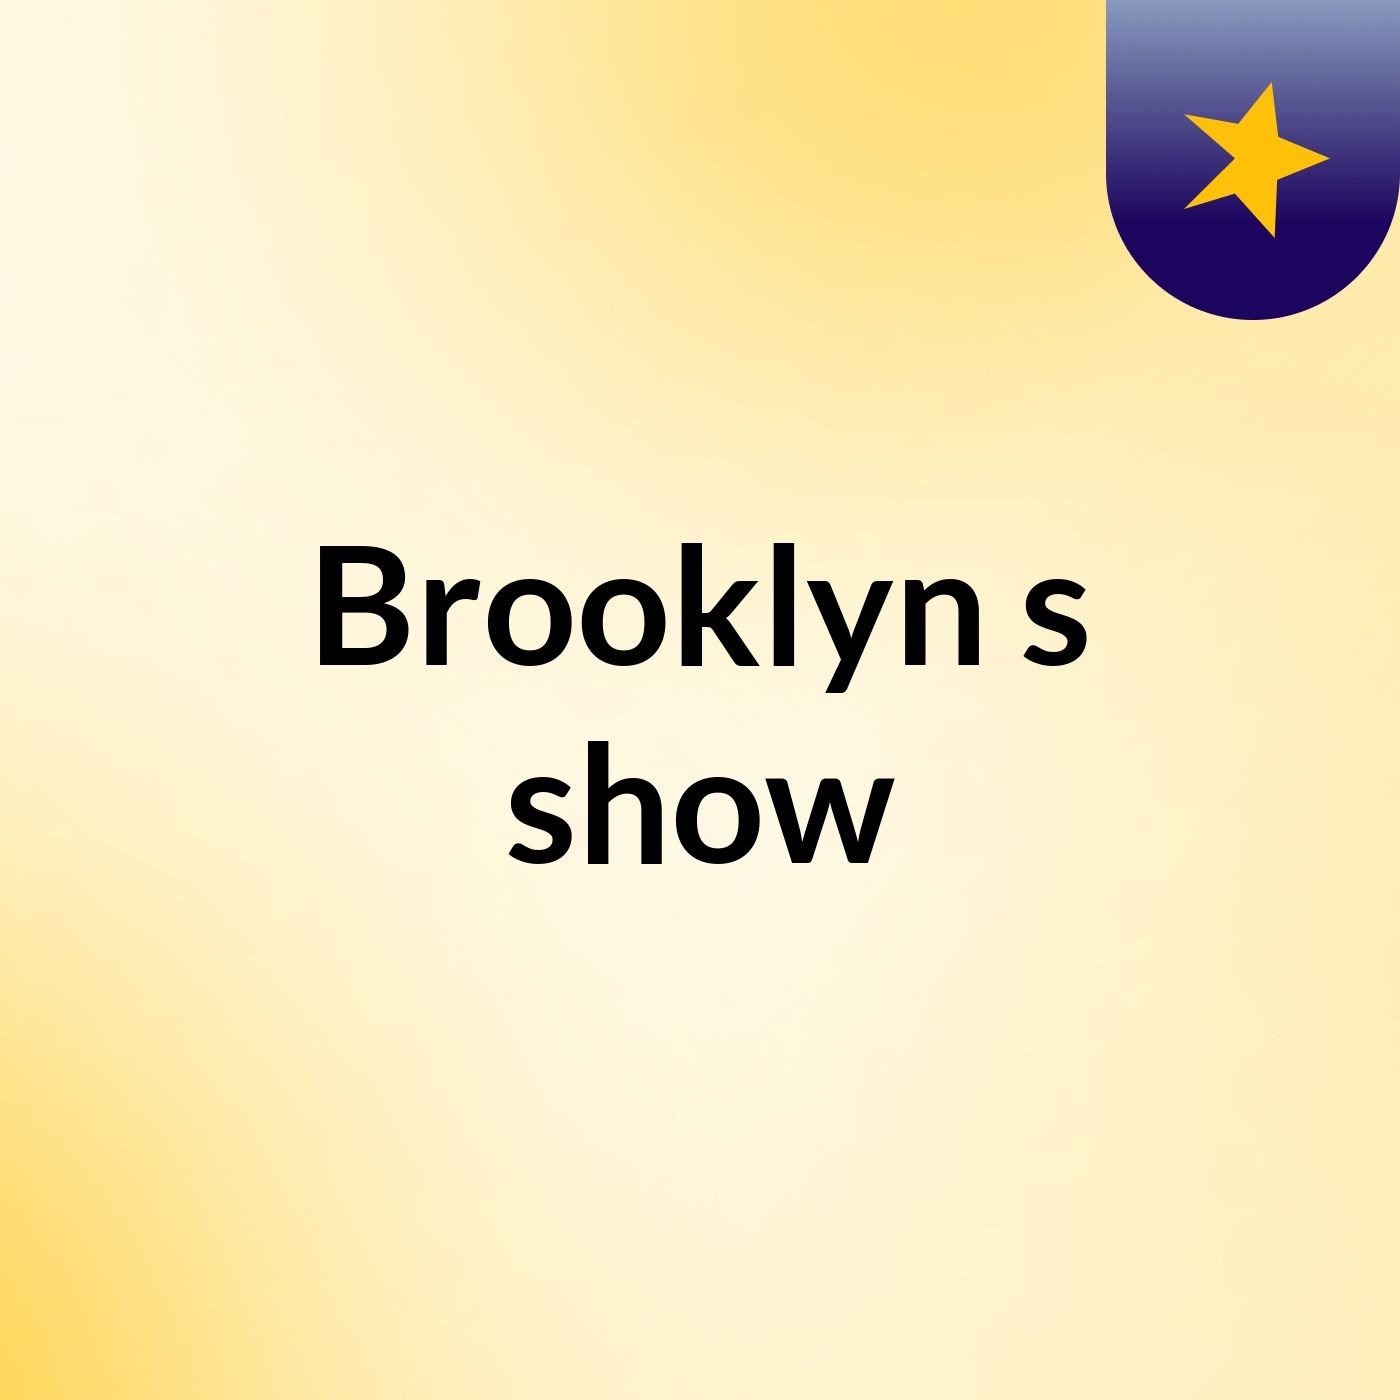 Brooklyn's show